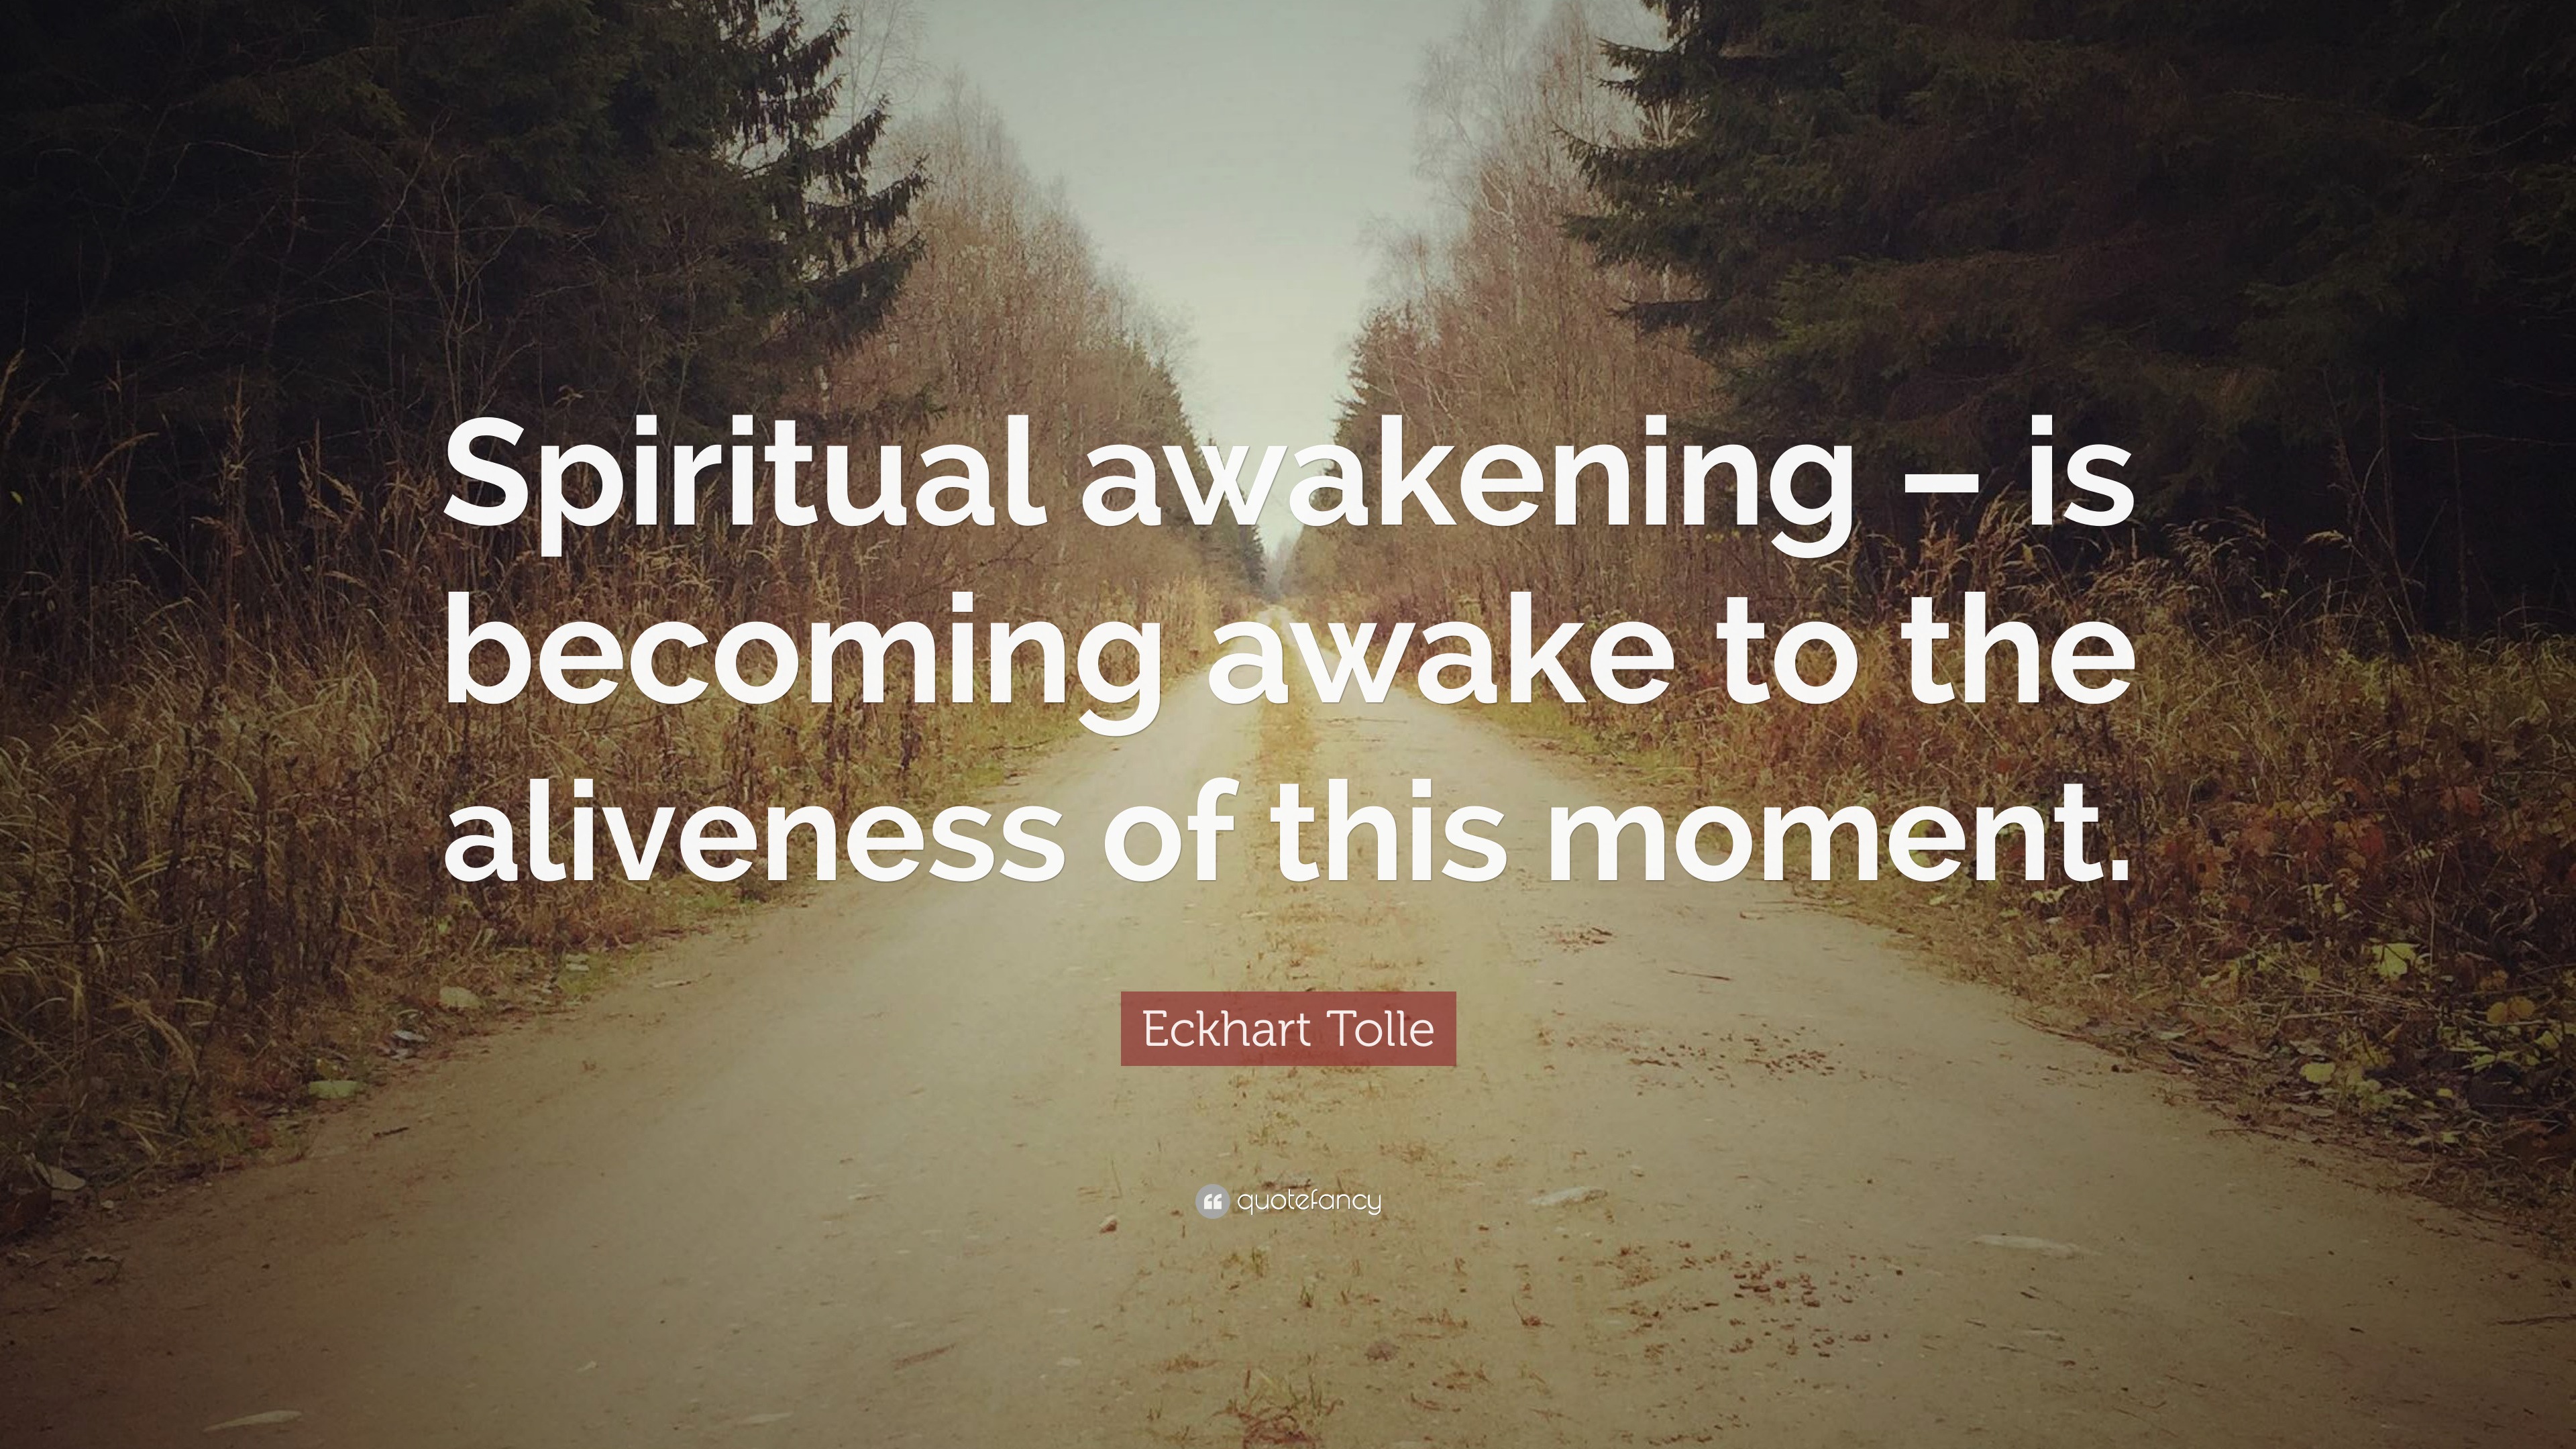 Eckhart Tolle Quote: “Spiritual awakening – is becoming awake to the ...